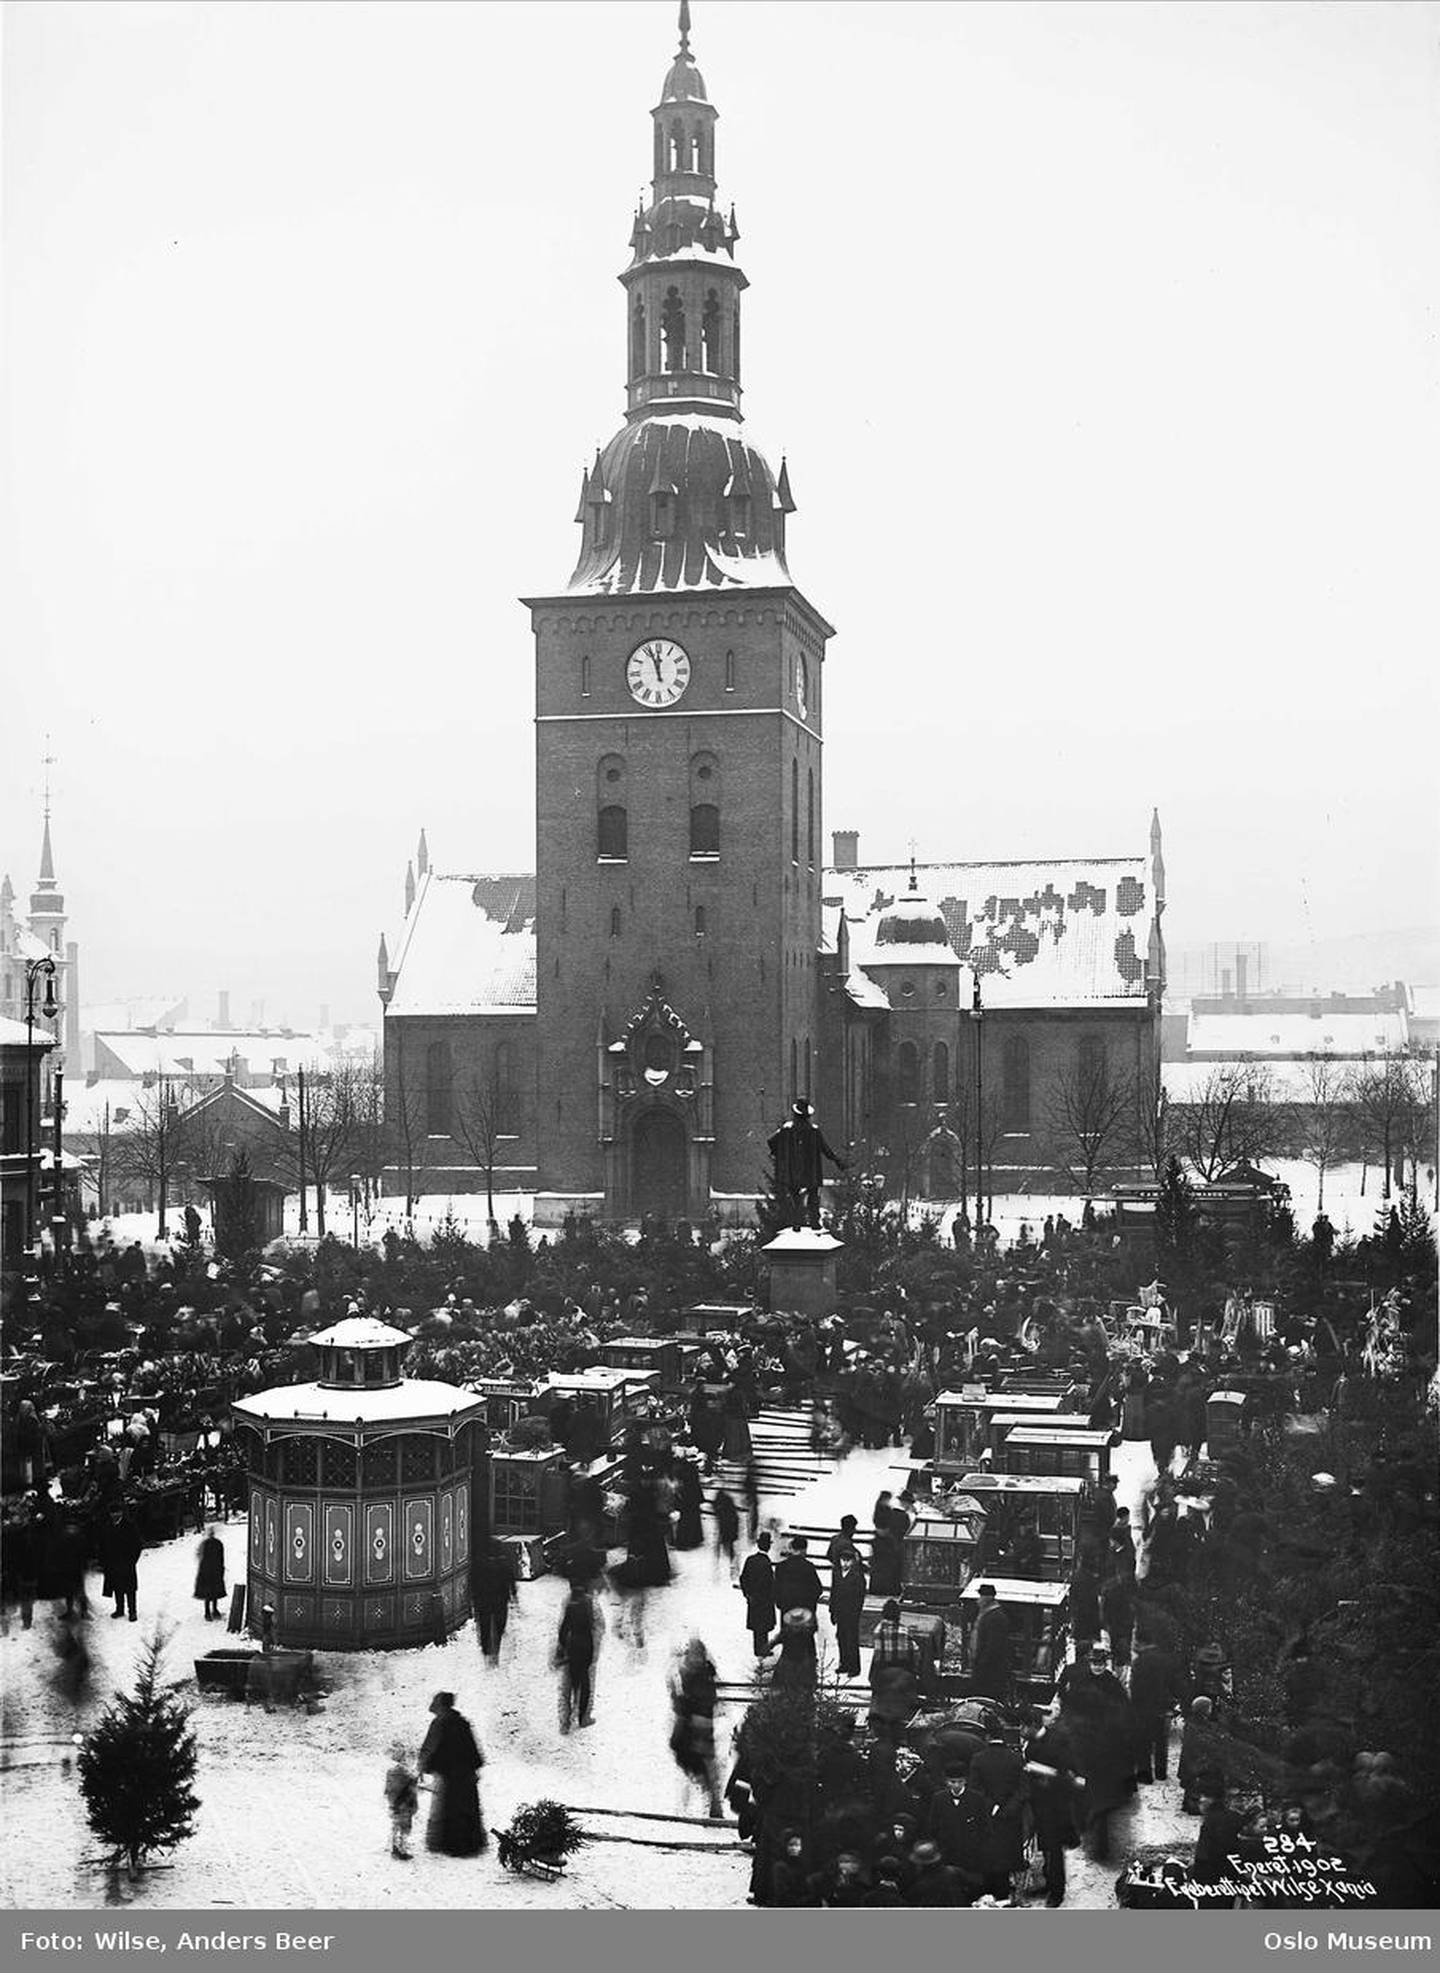 Juletresalg, Stortorget i Oslo, 1902.